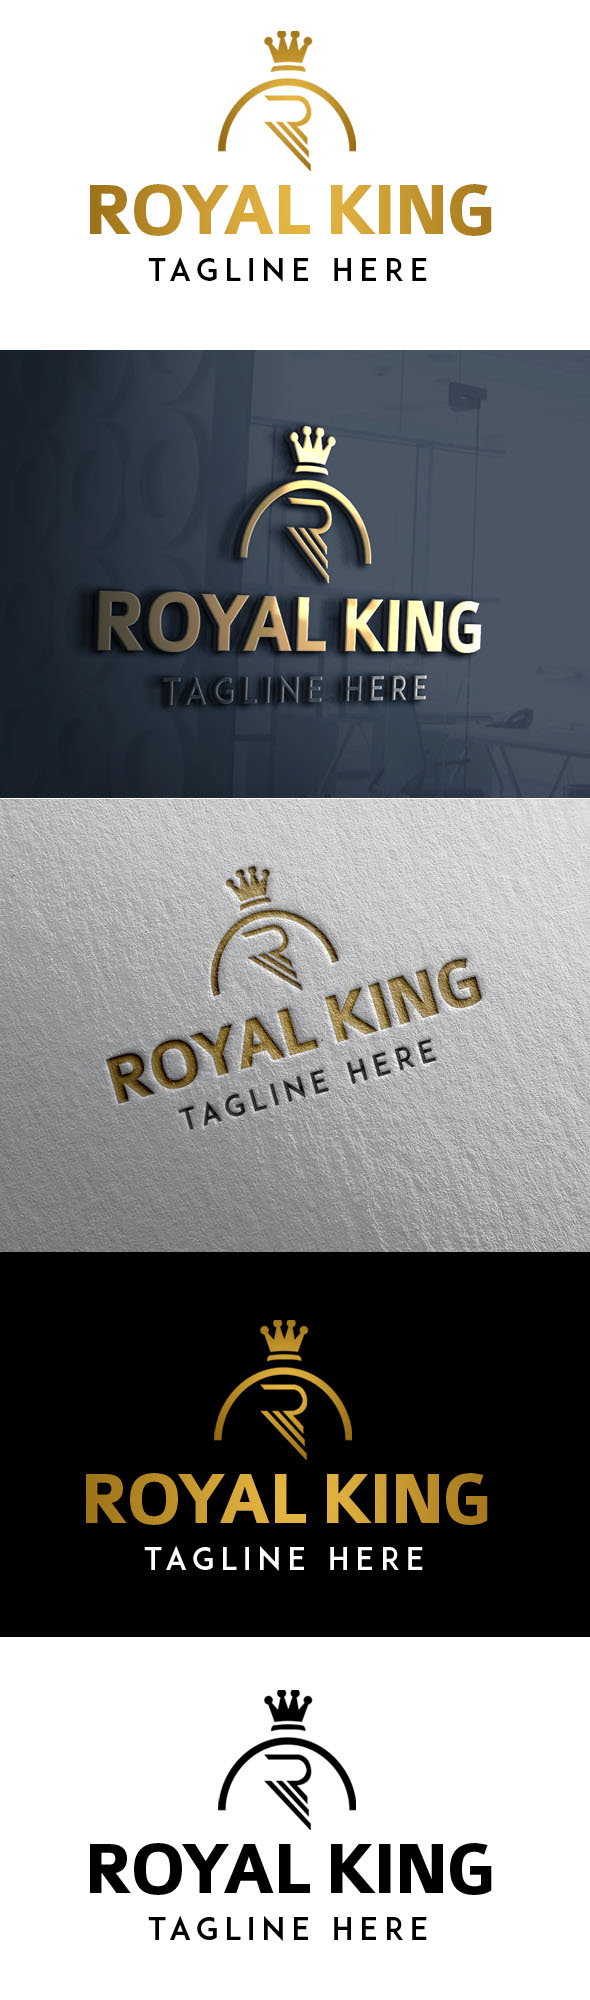 Royal King Logo Template Preview image.